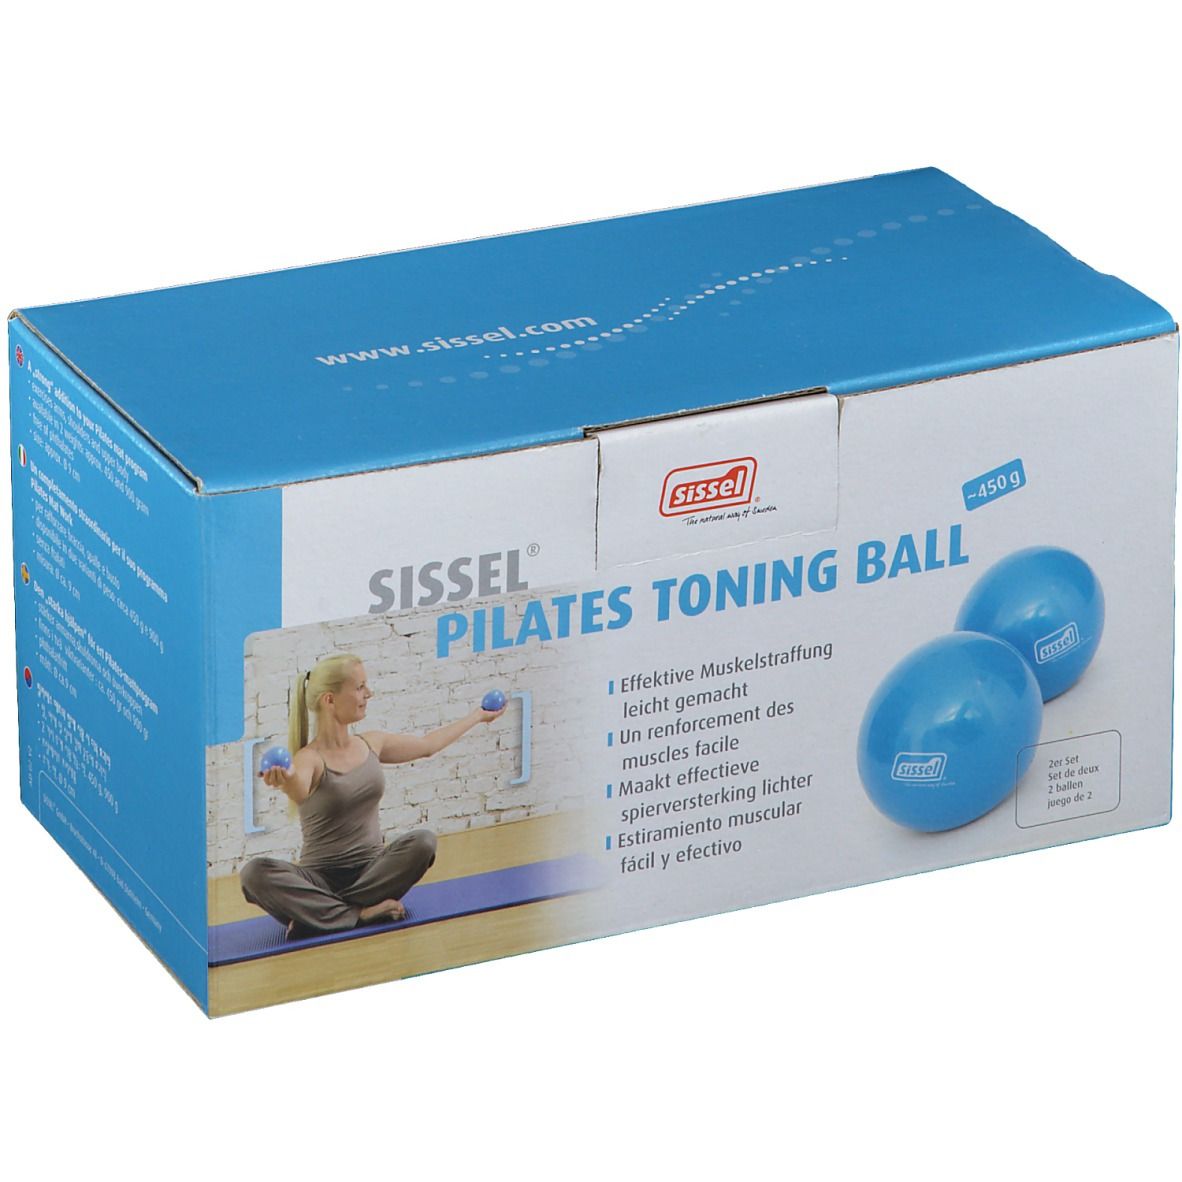 Sissel® Pilates Toning Ball 450 g